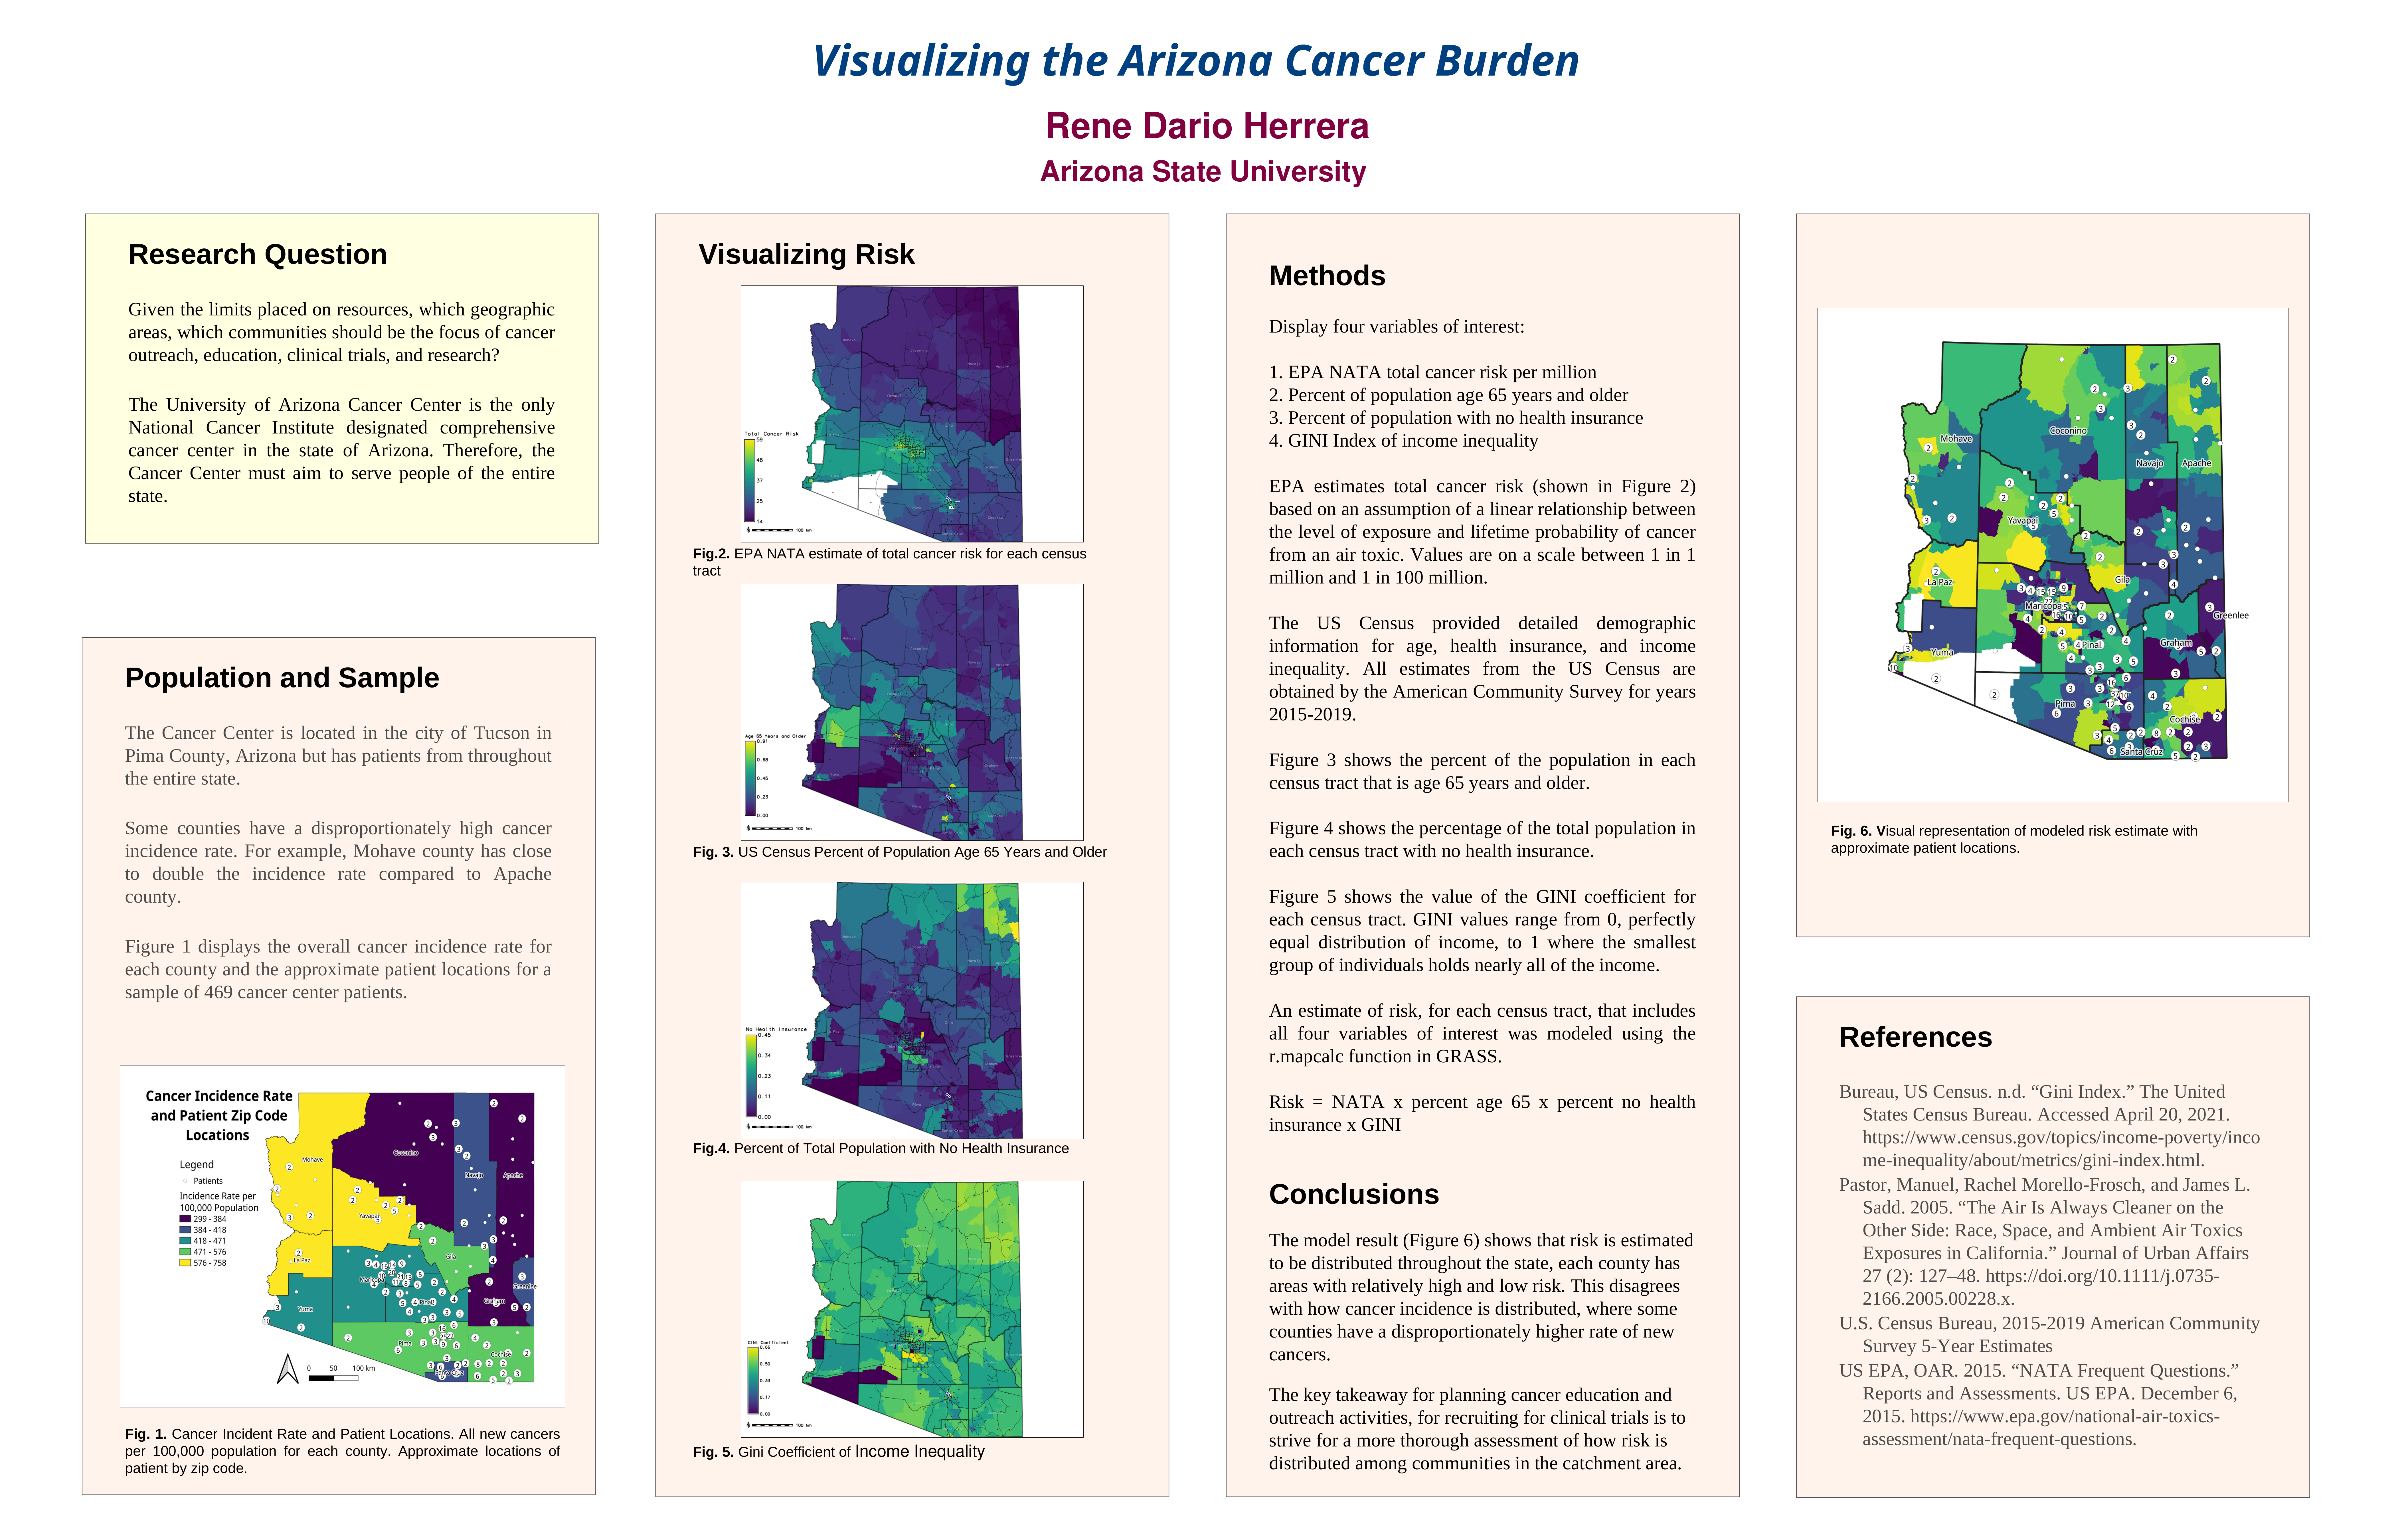 Visualizing Cancer Risk